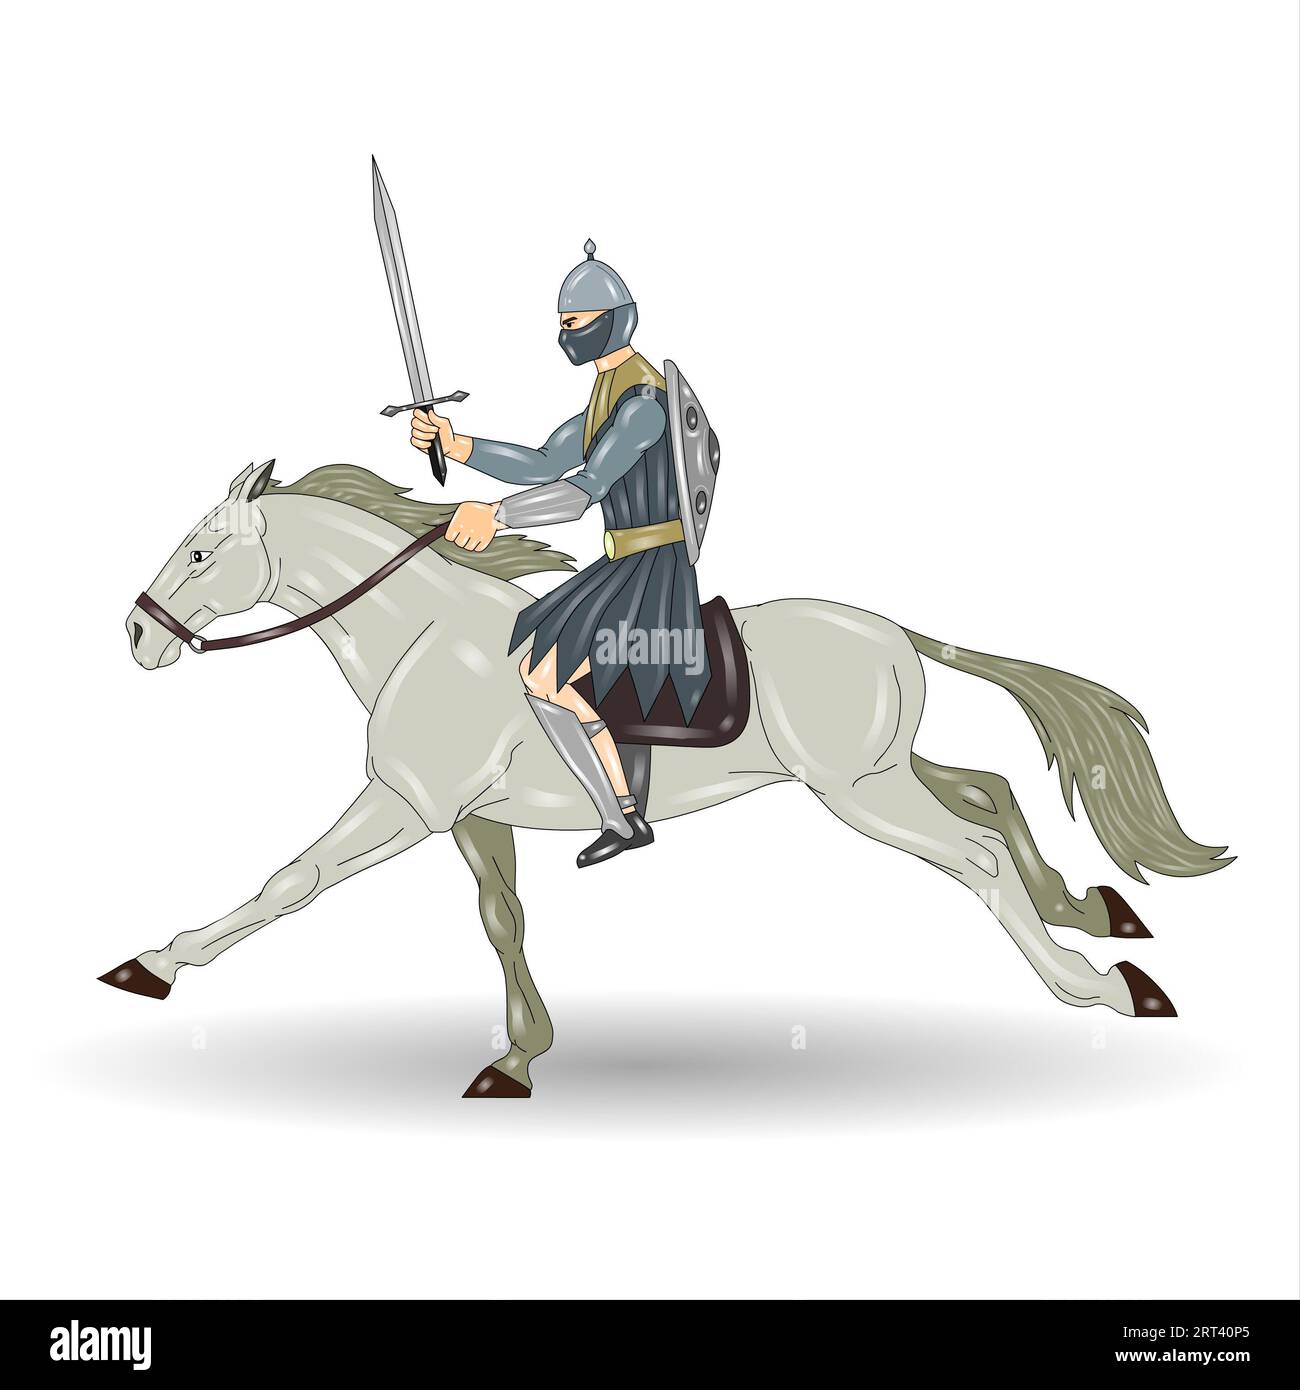 Knight on horseback with sword. Vector illustration isolated on white background. Stock Photo